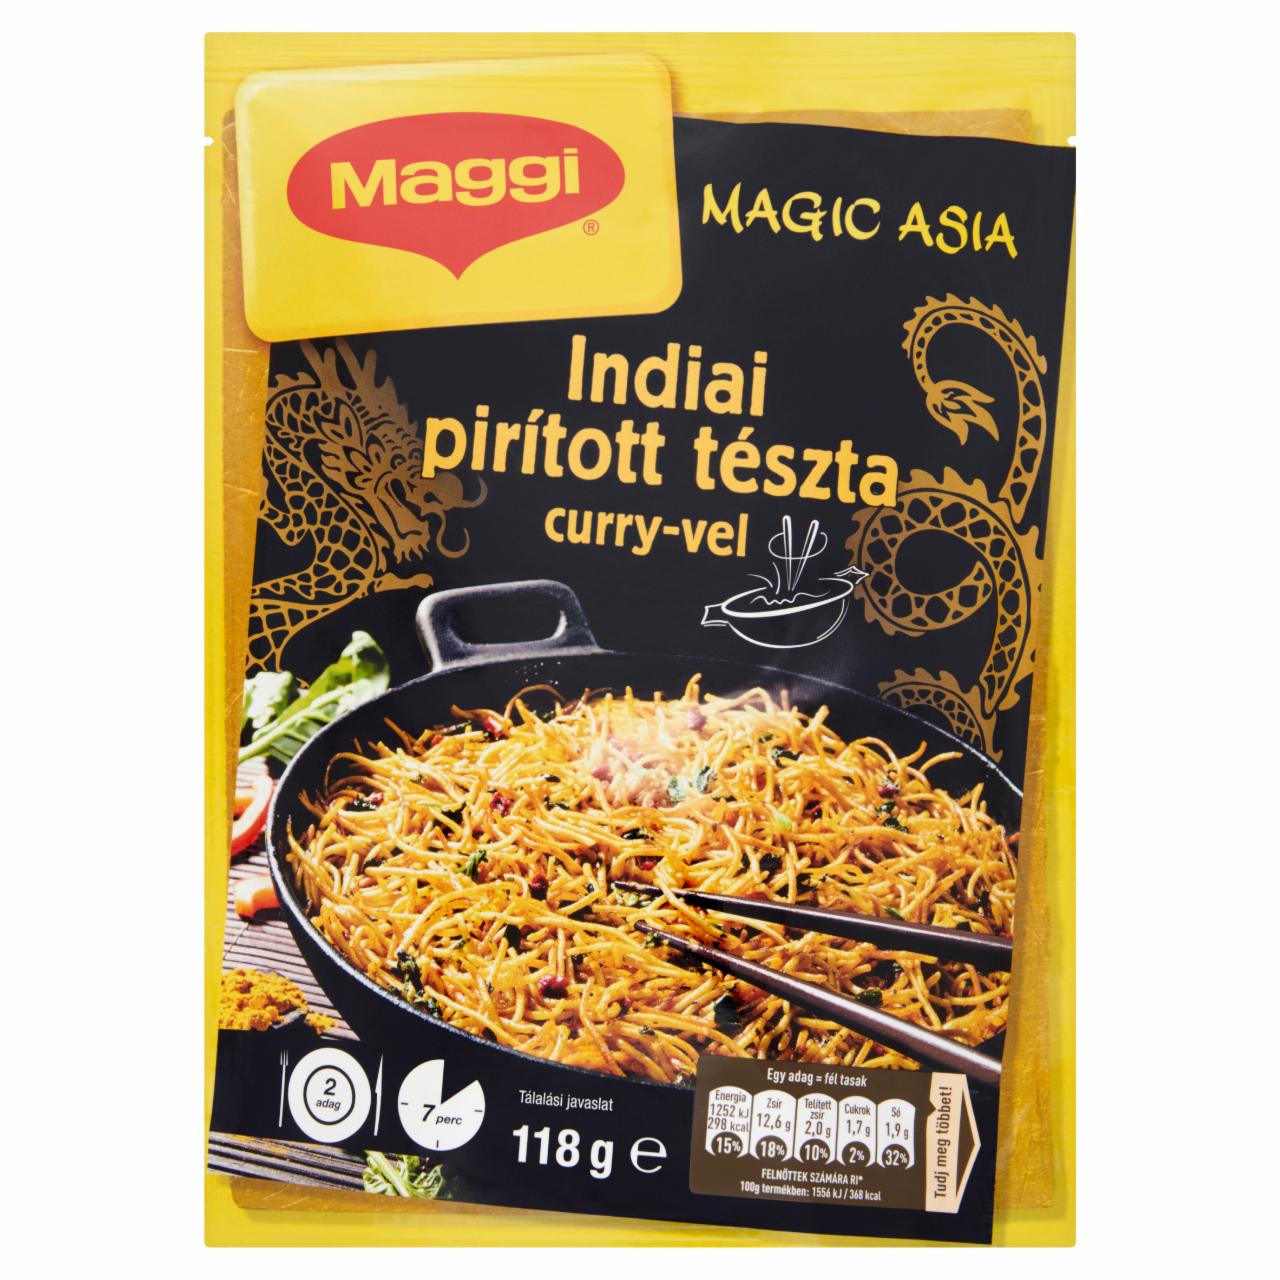 Képek - Maggi Magic Asia Indiai pirított tészta curry-vel 118 g